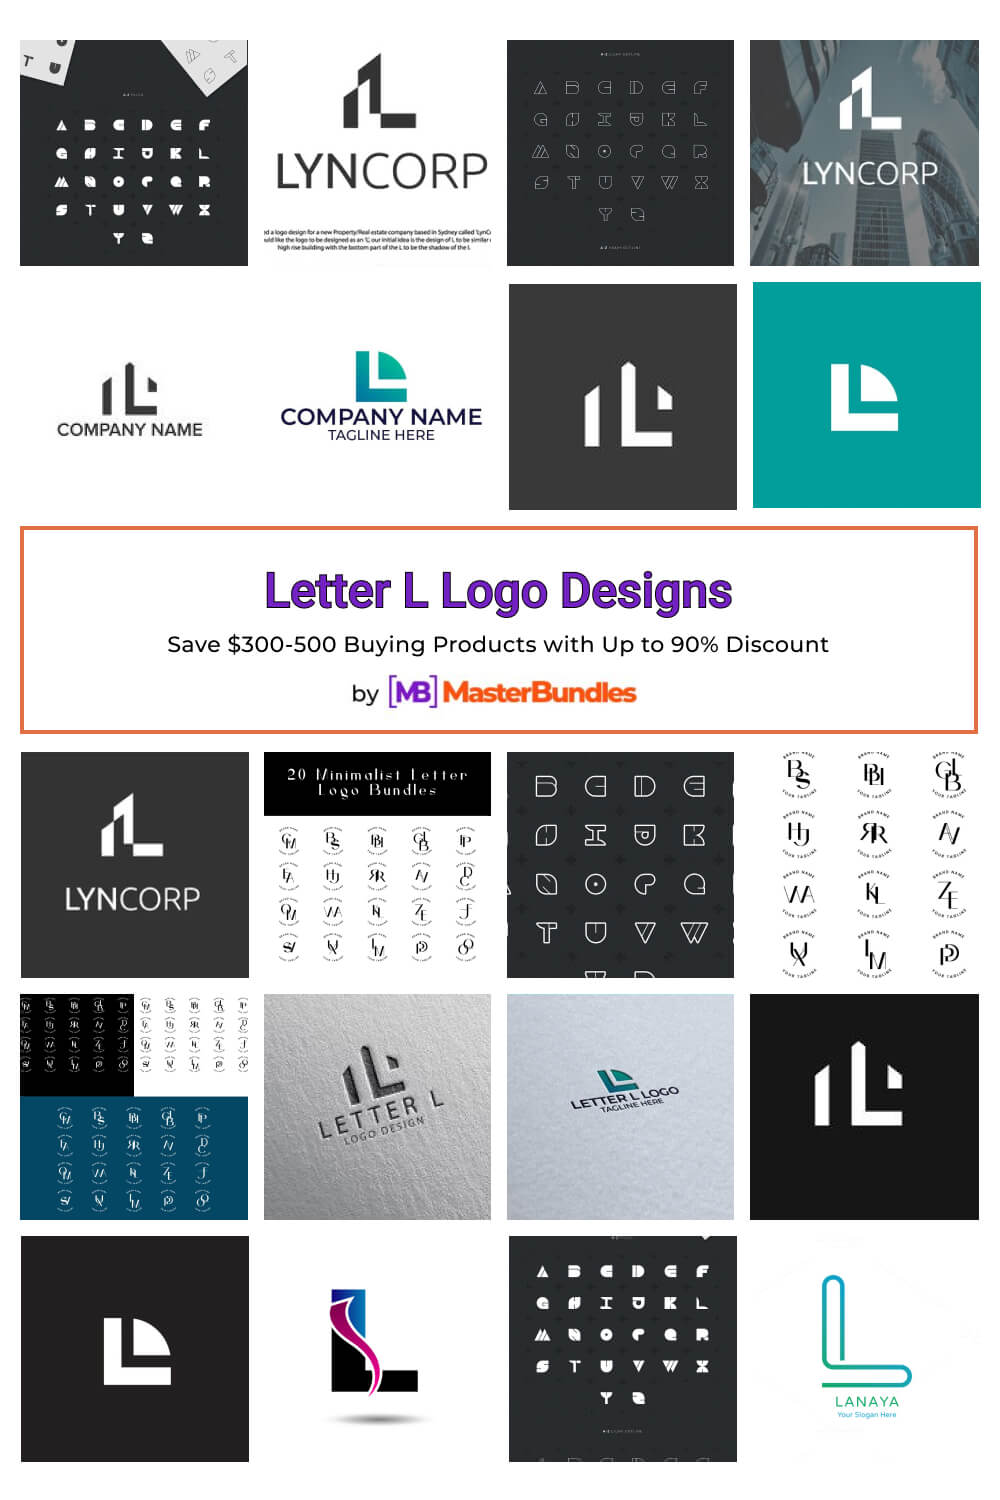 letter l logo designs pinterest image.